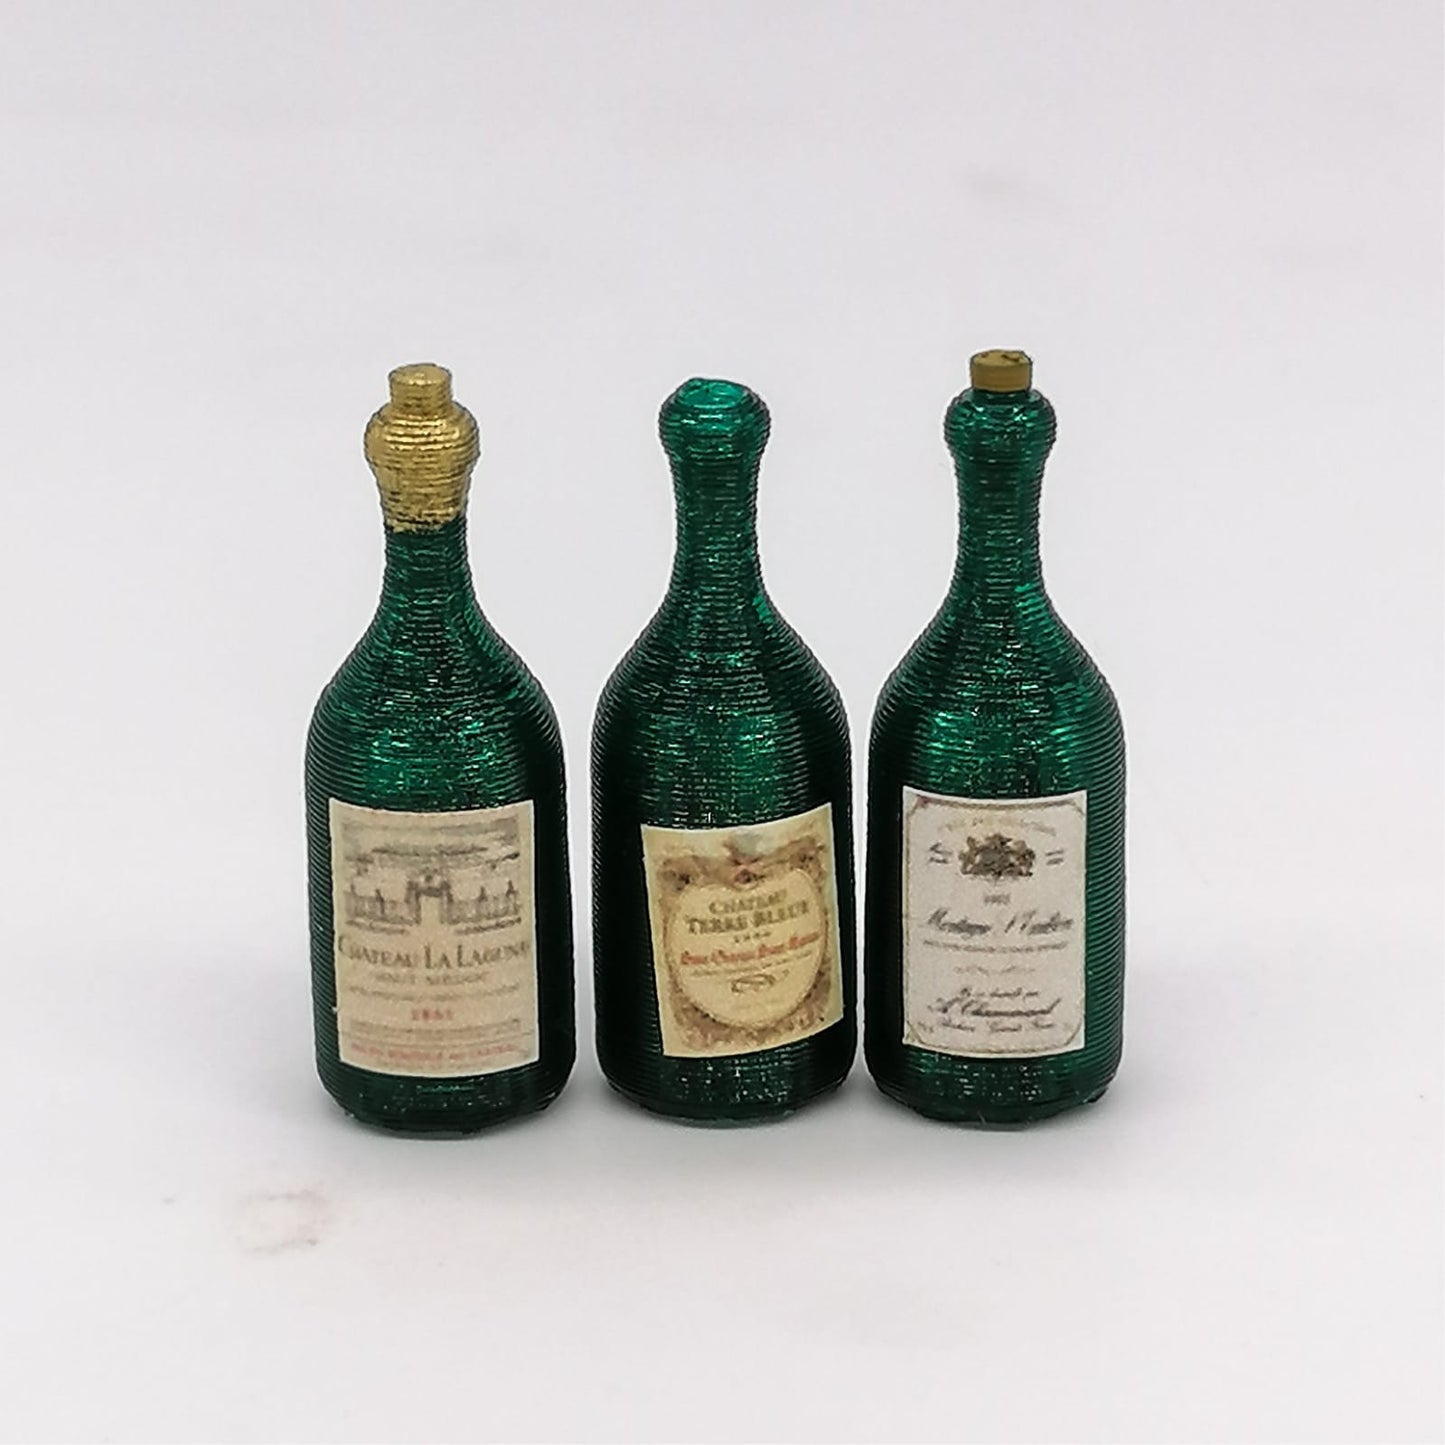 Miniatures in 1:12 scale wine bottles